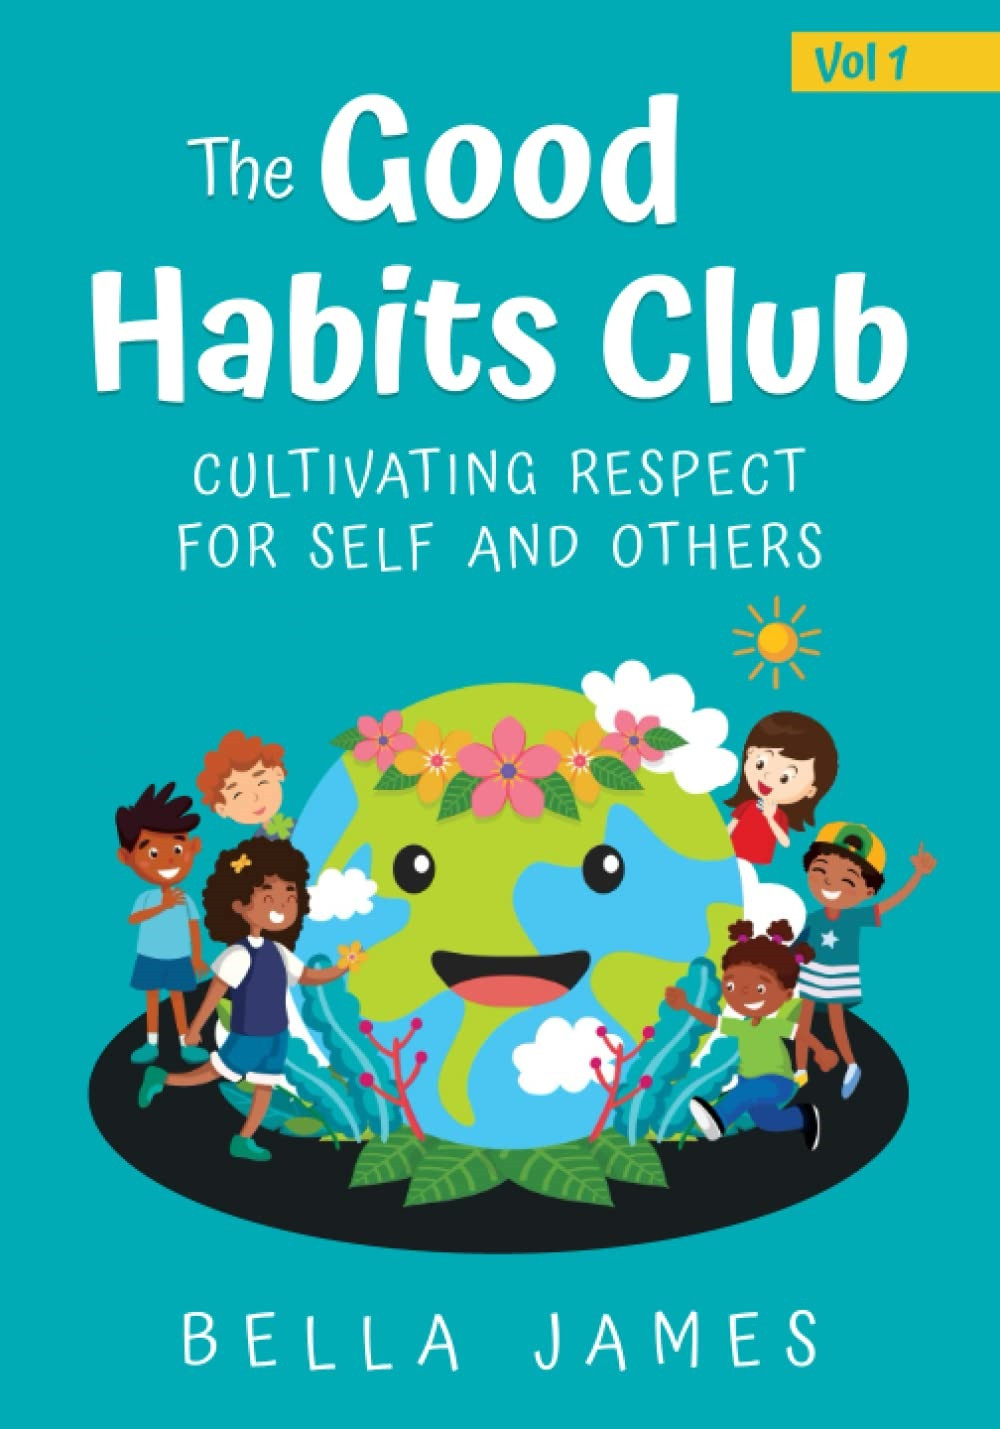 The Good Habits Club